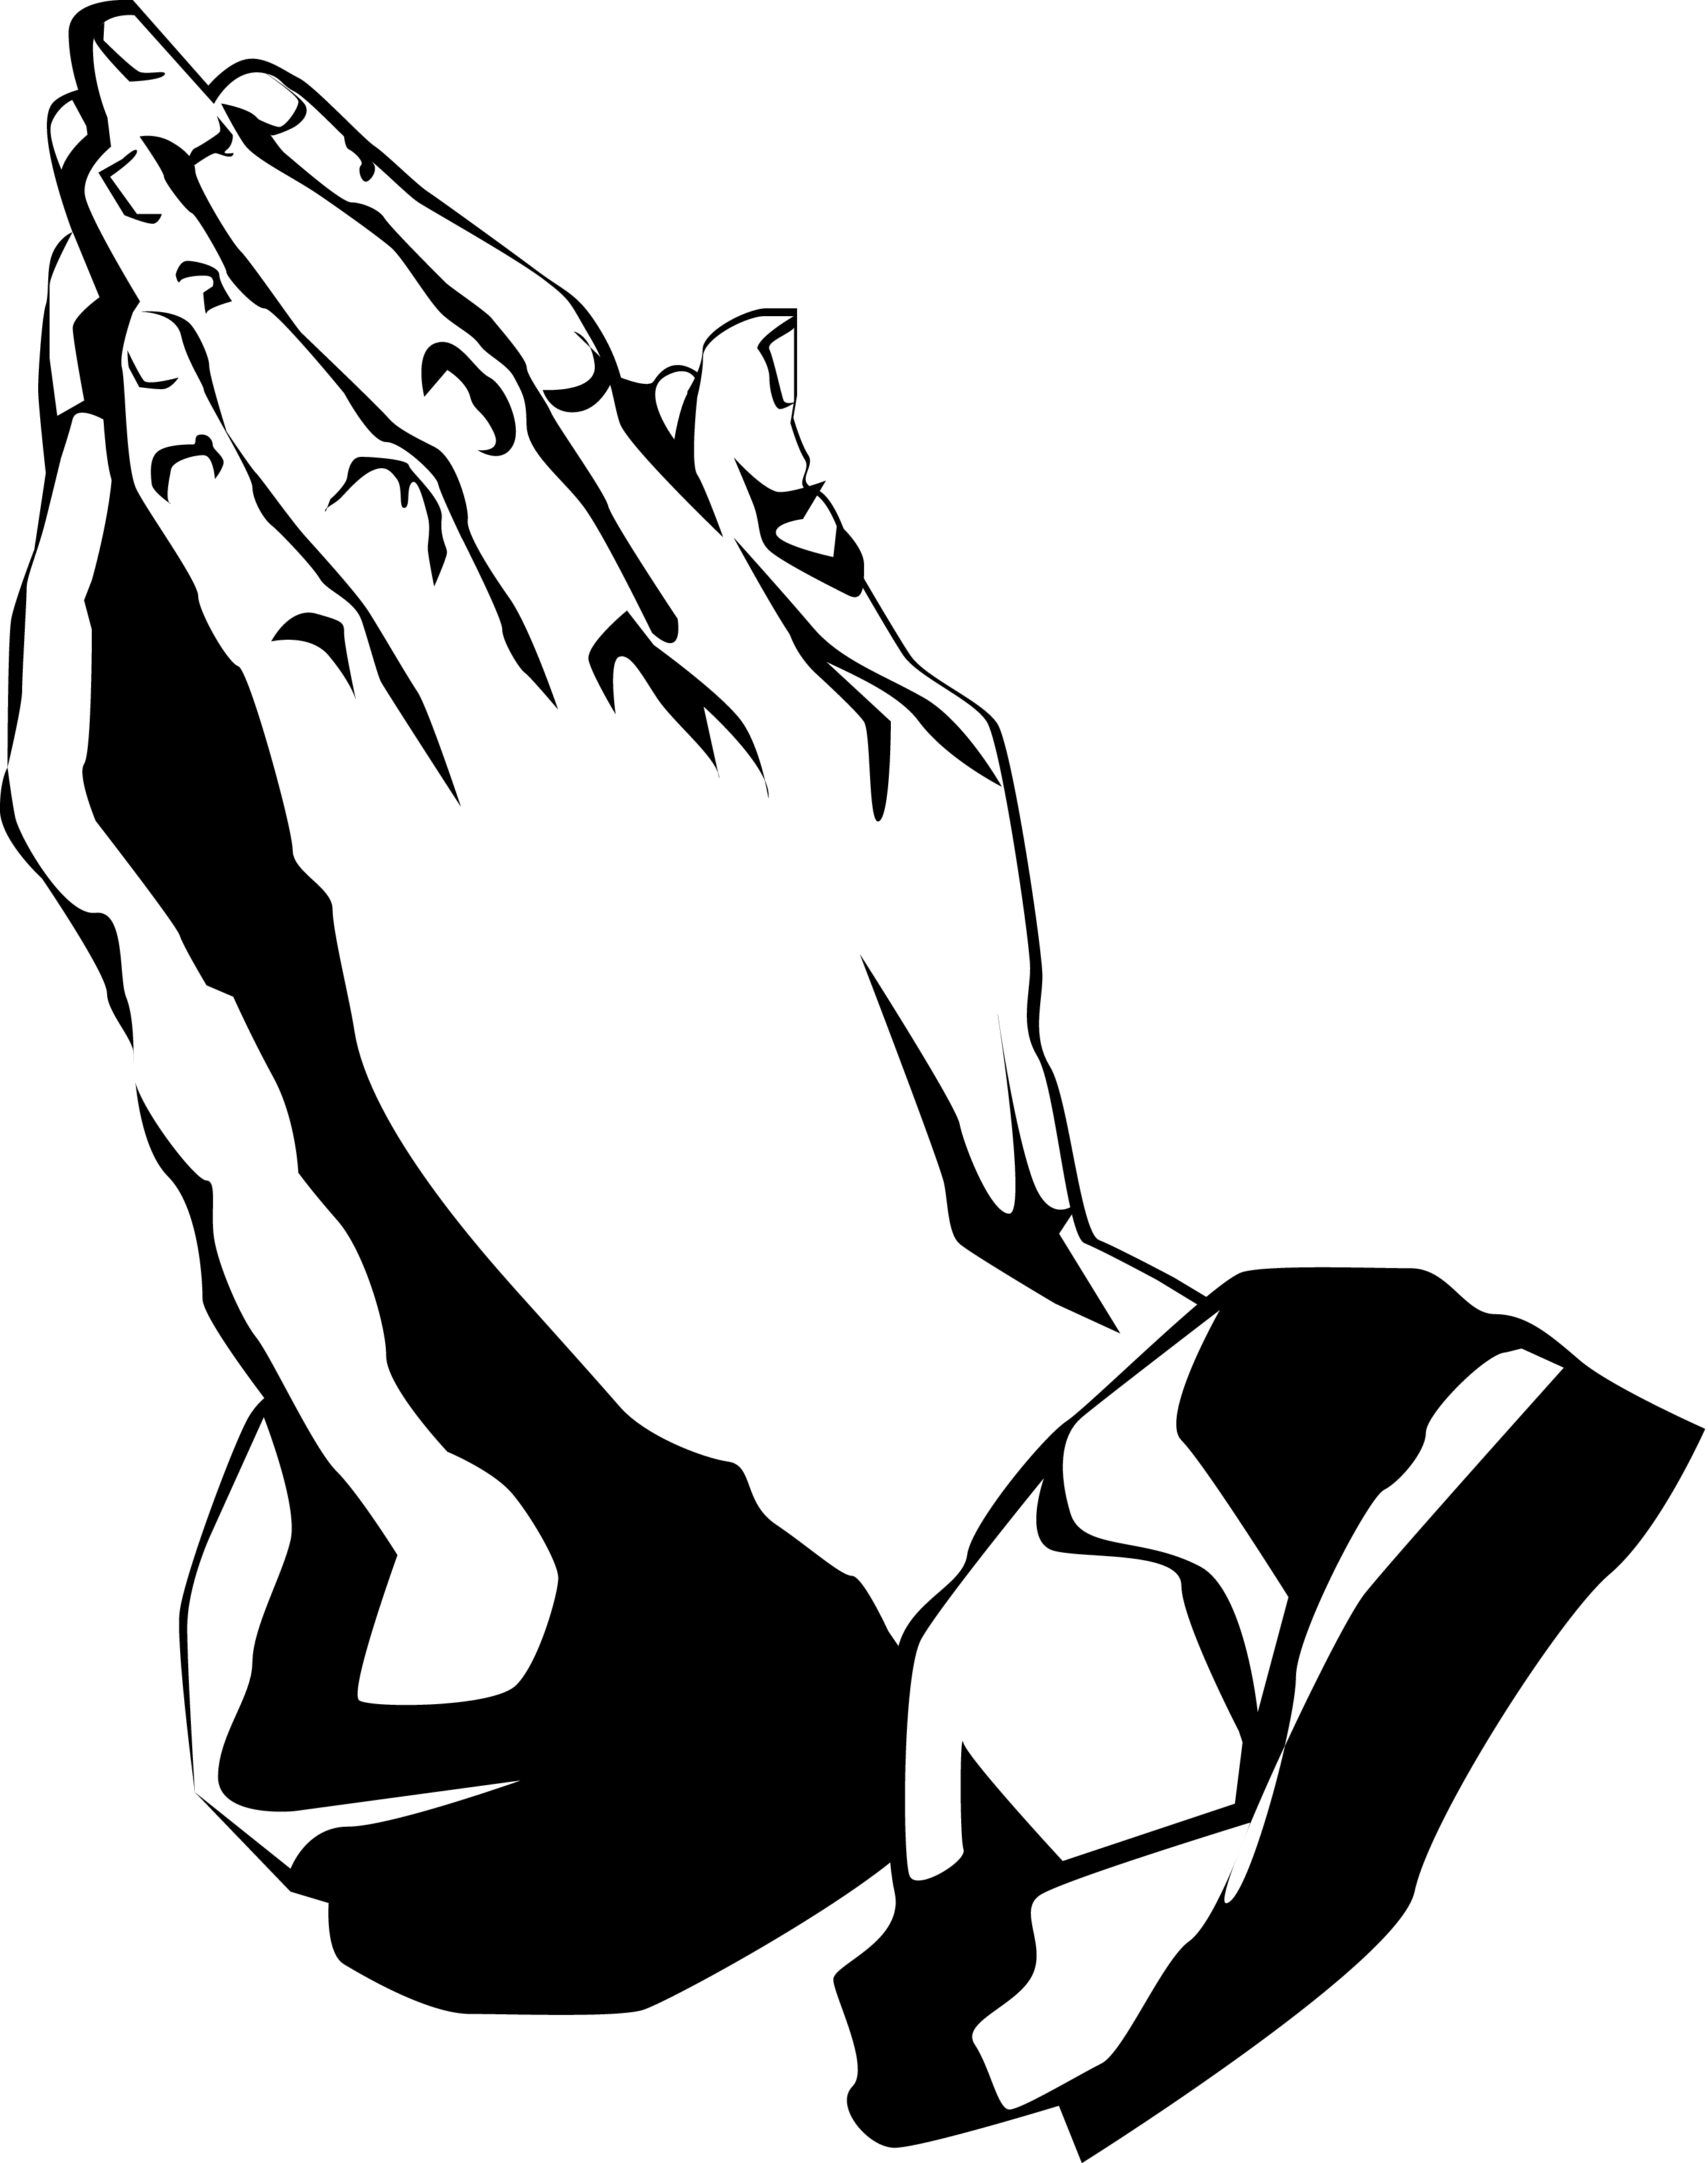 Praying hands praying hand prayer clipart image 9 4 3